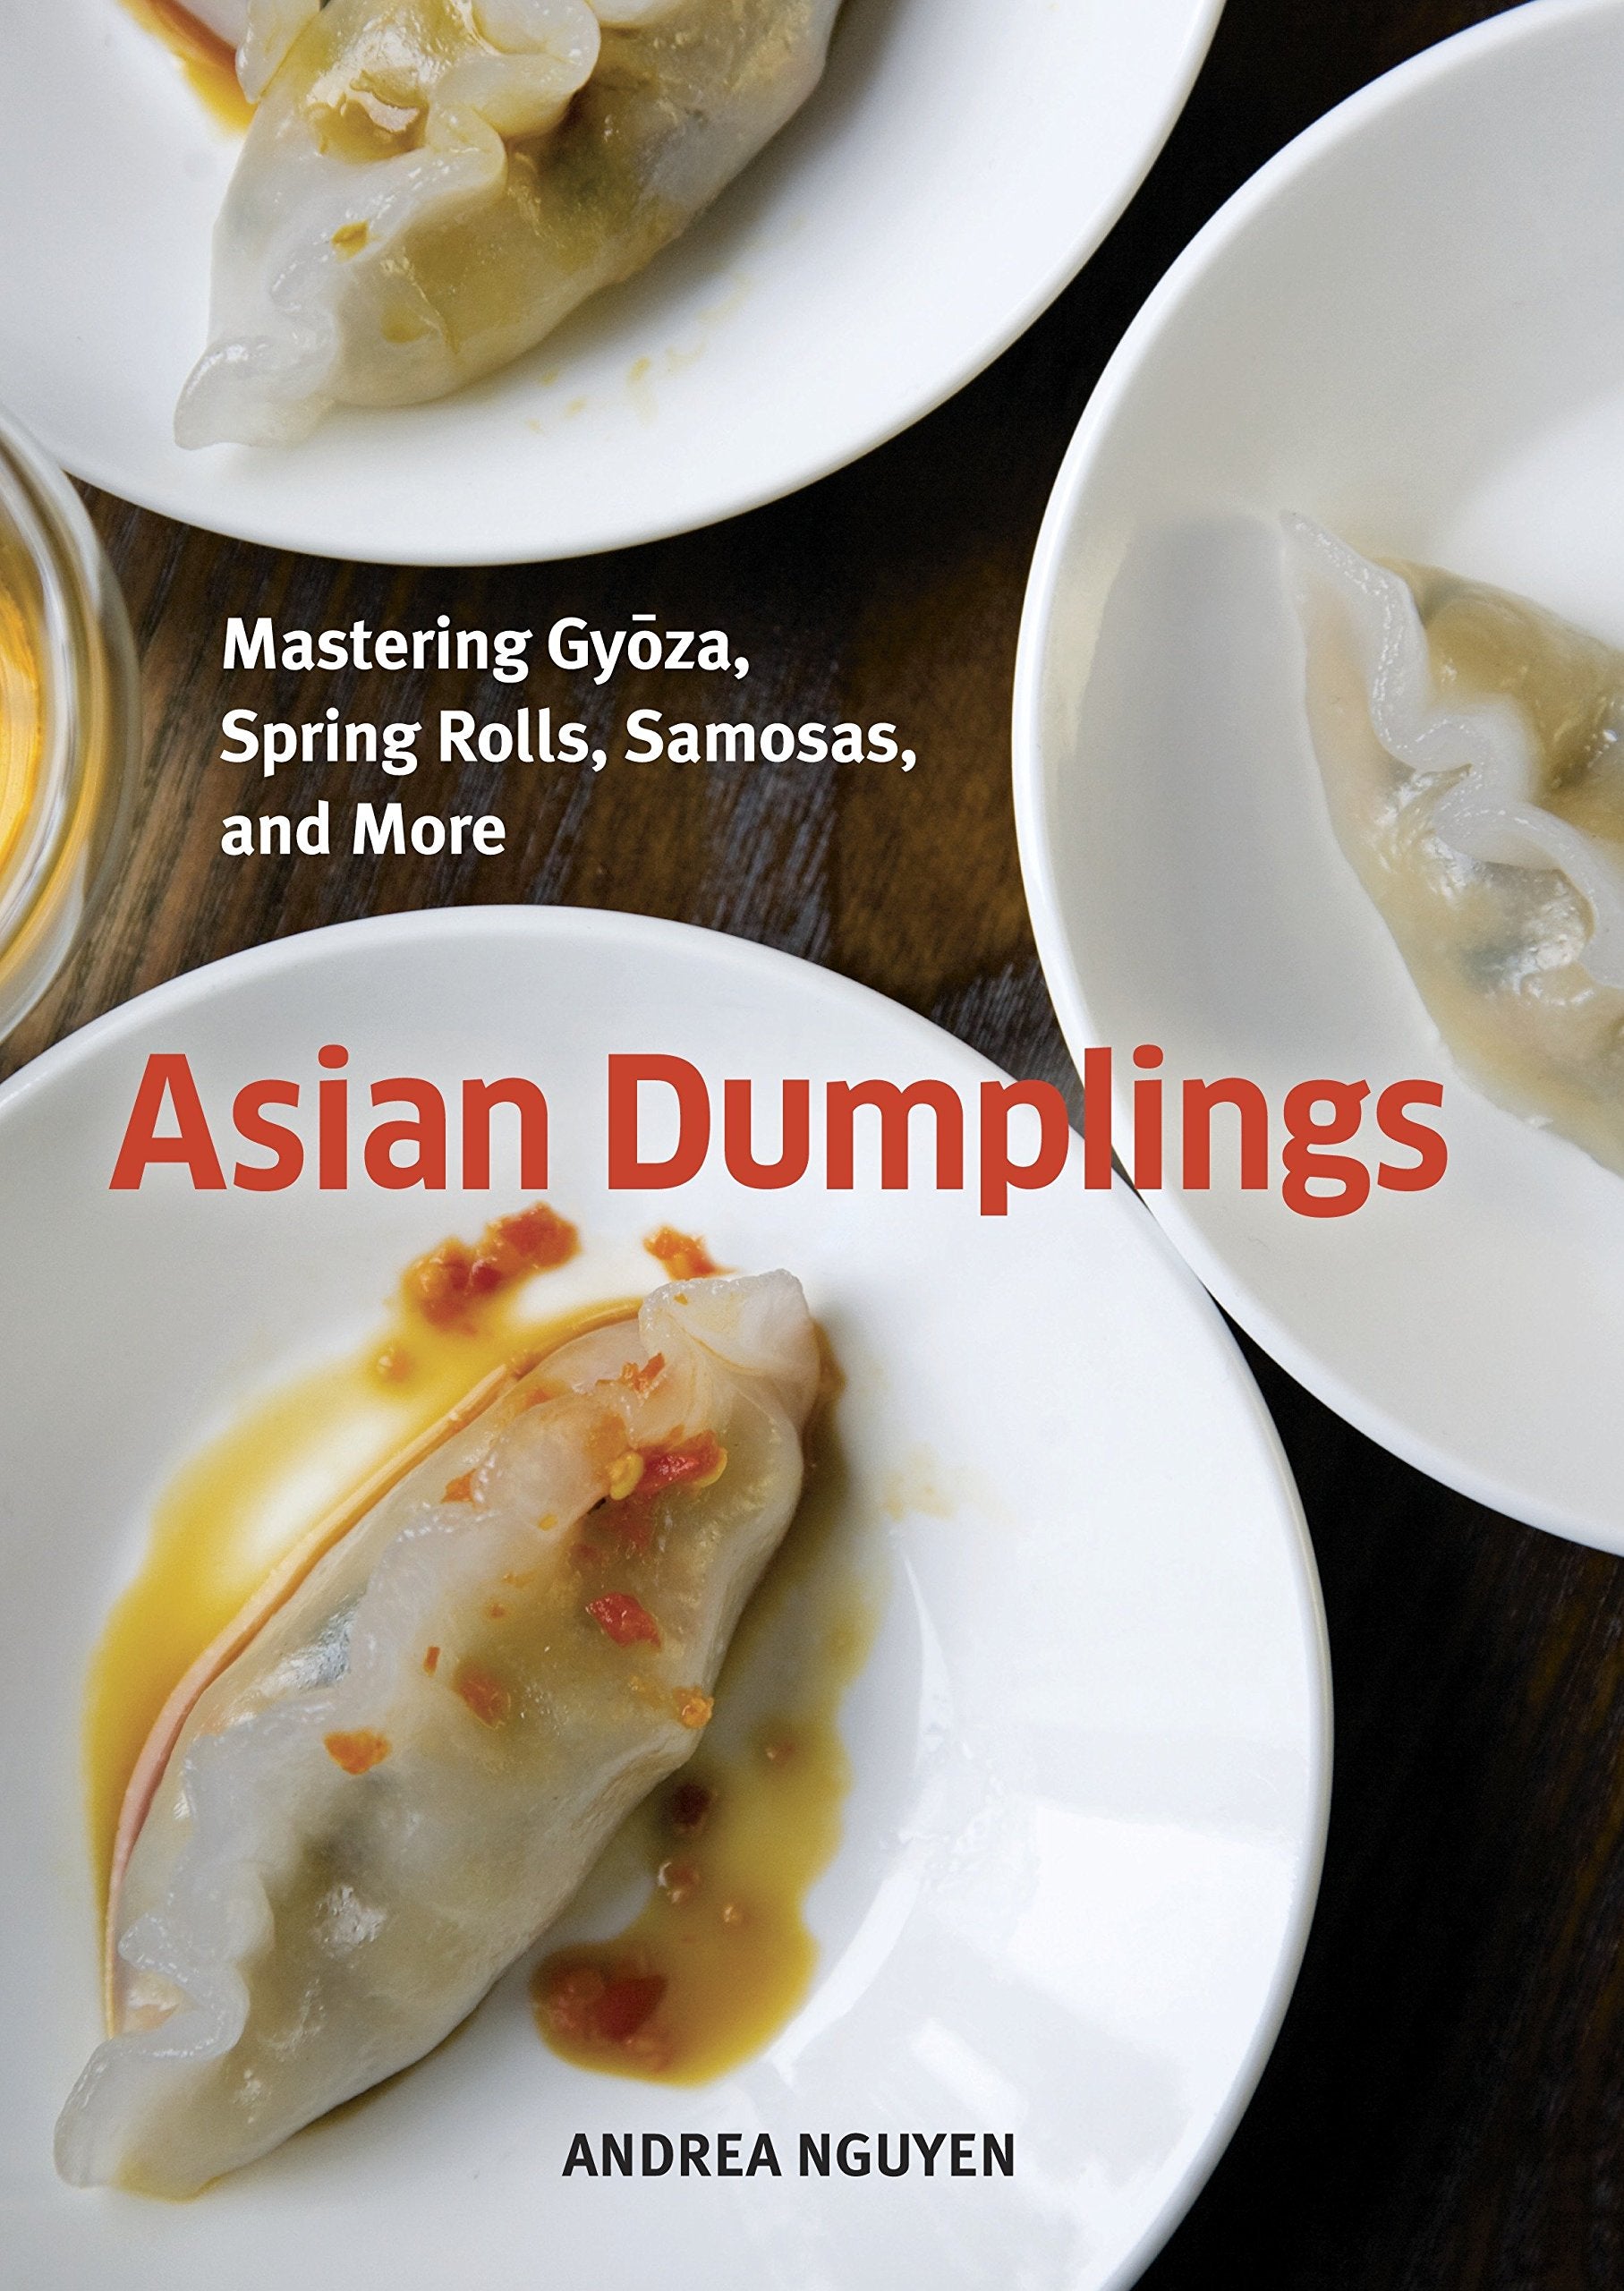 Asian Dumplings: Mastering Gyoza, Spring Rolls, Samosas, and More (Andrea Nguyen) *Signed*